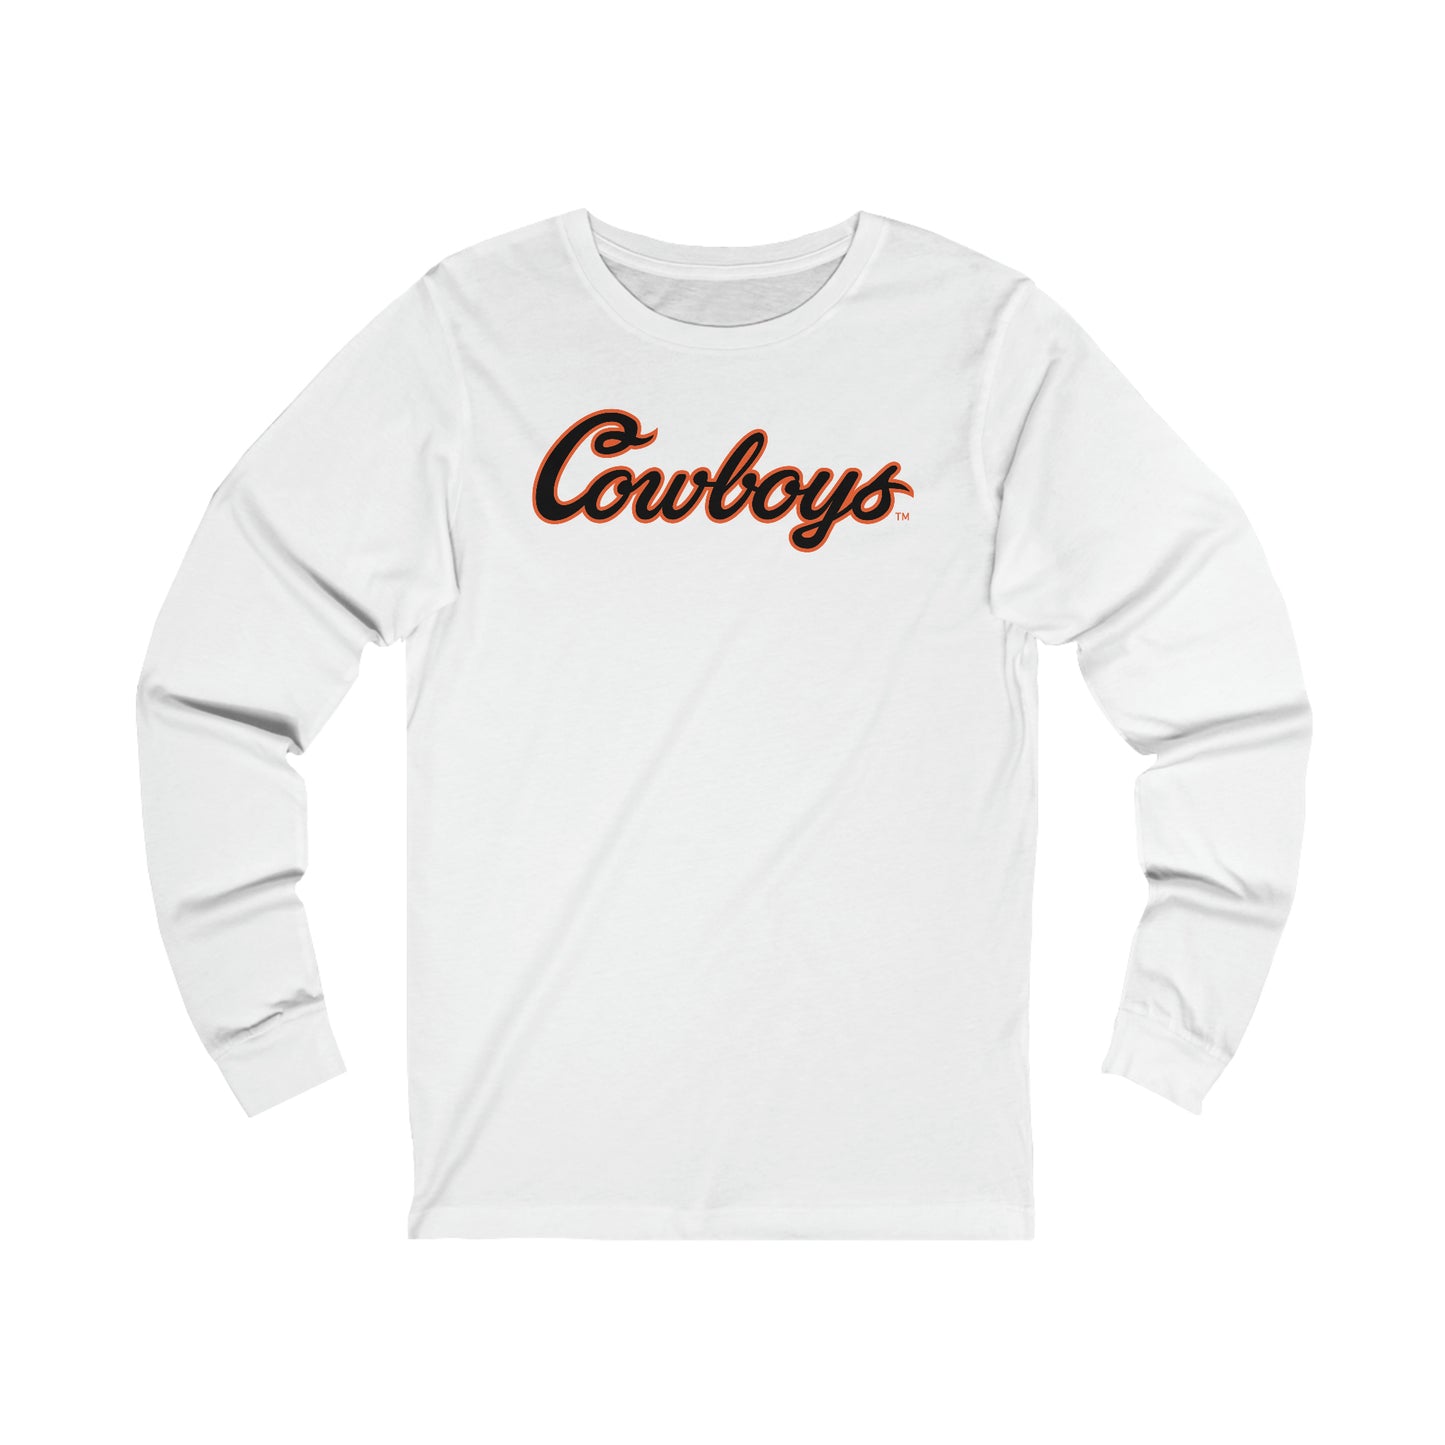 Ollie Gordon II #0 Cursive Cowboys Long Sleeve T-Shirt